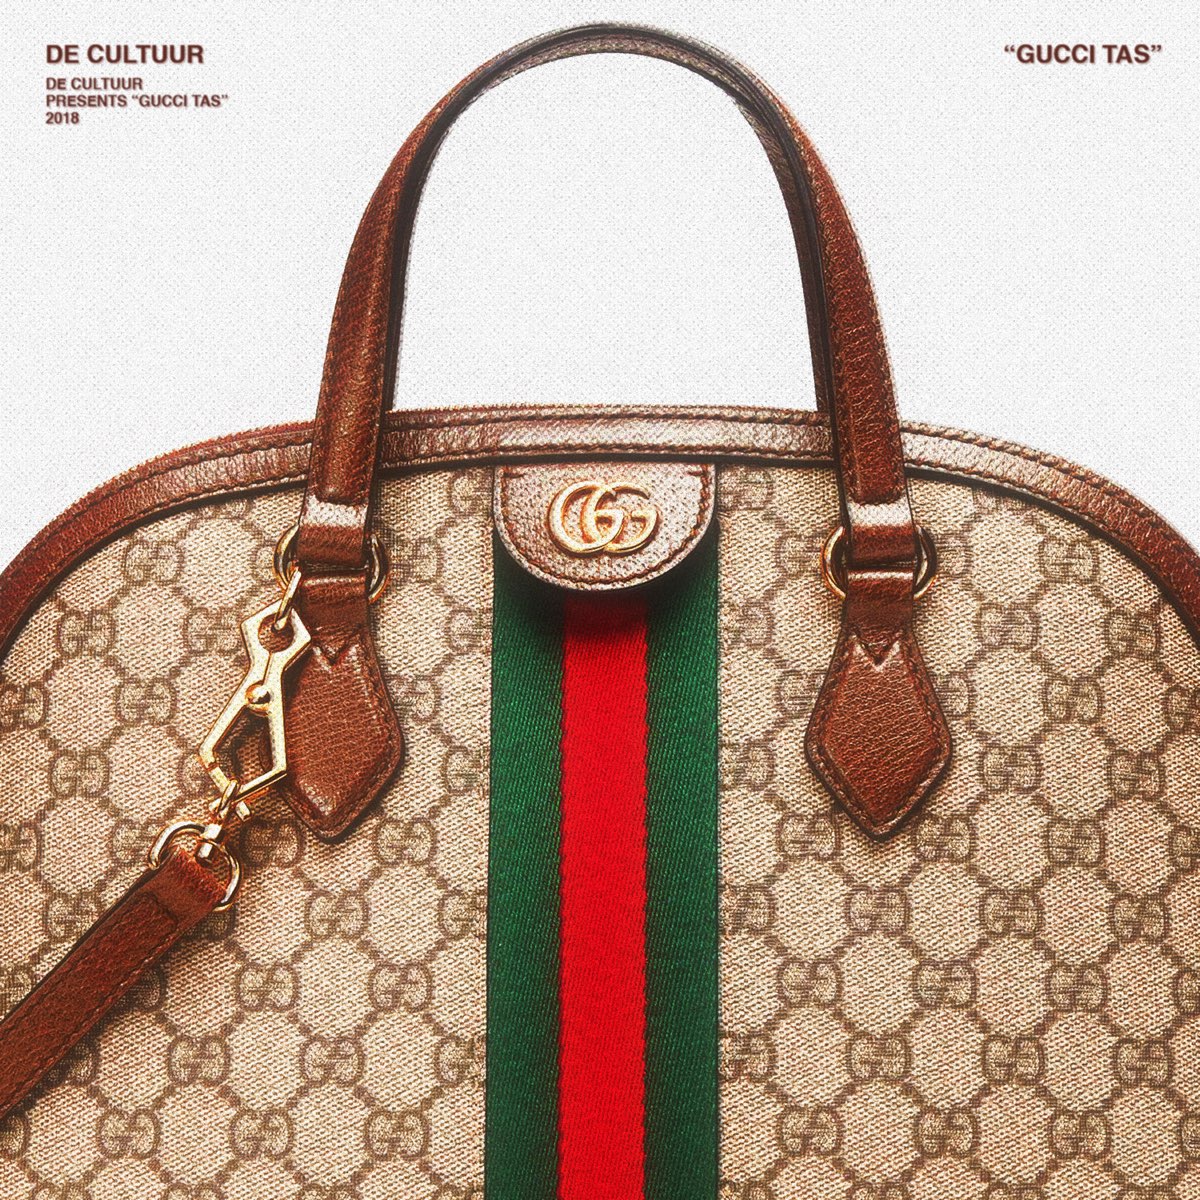 ik ben ziek Wreed Transparant Gucci Tas - Single by De Cultuur on Apple Music